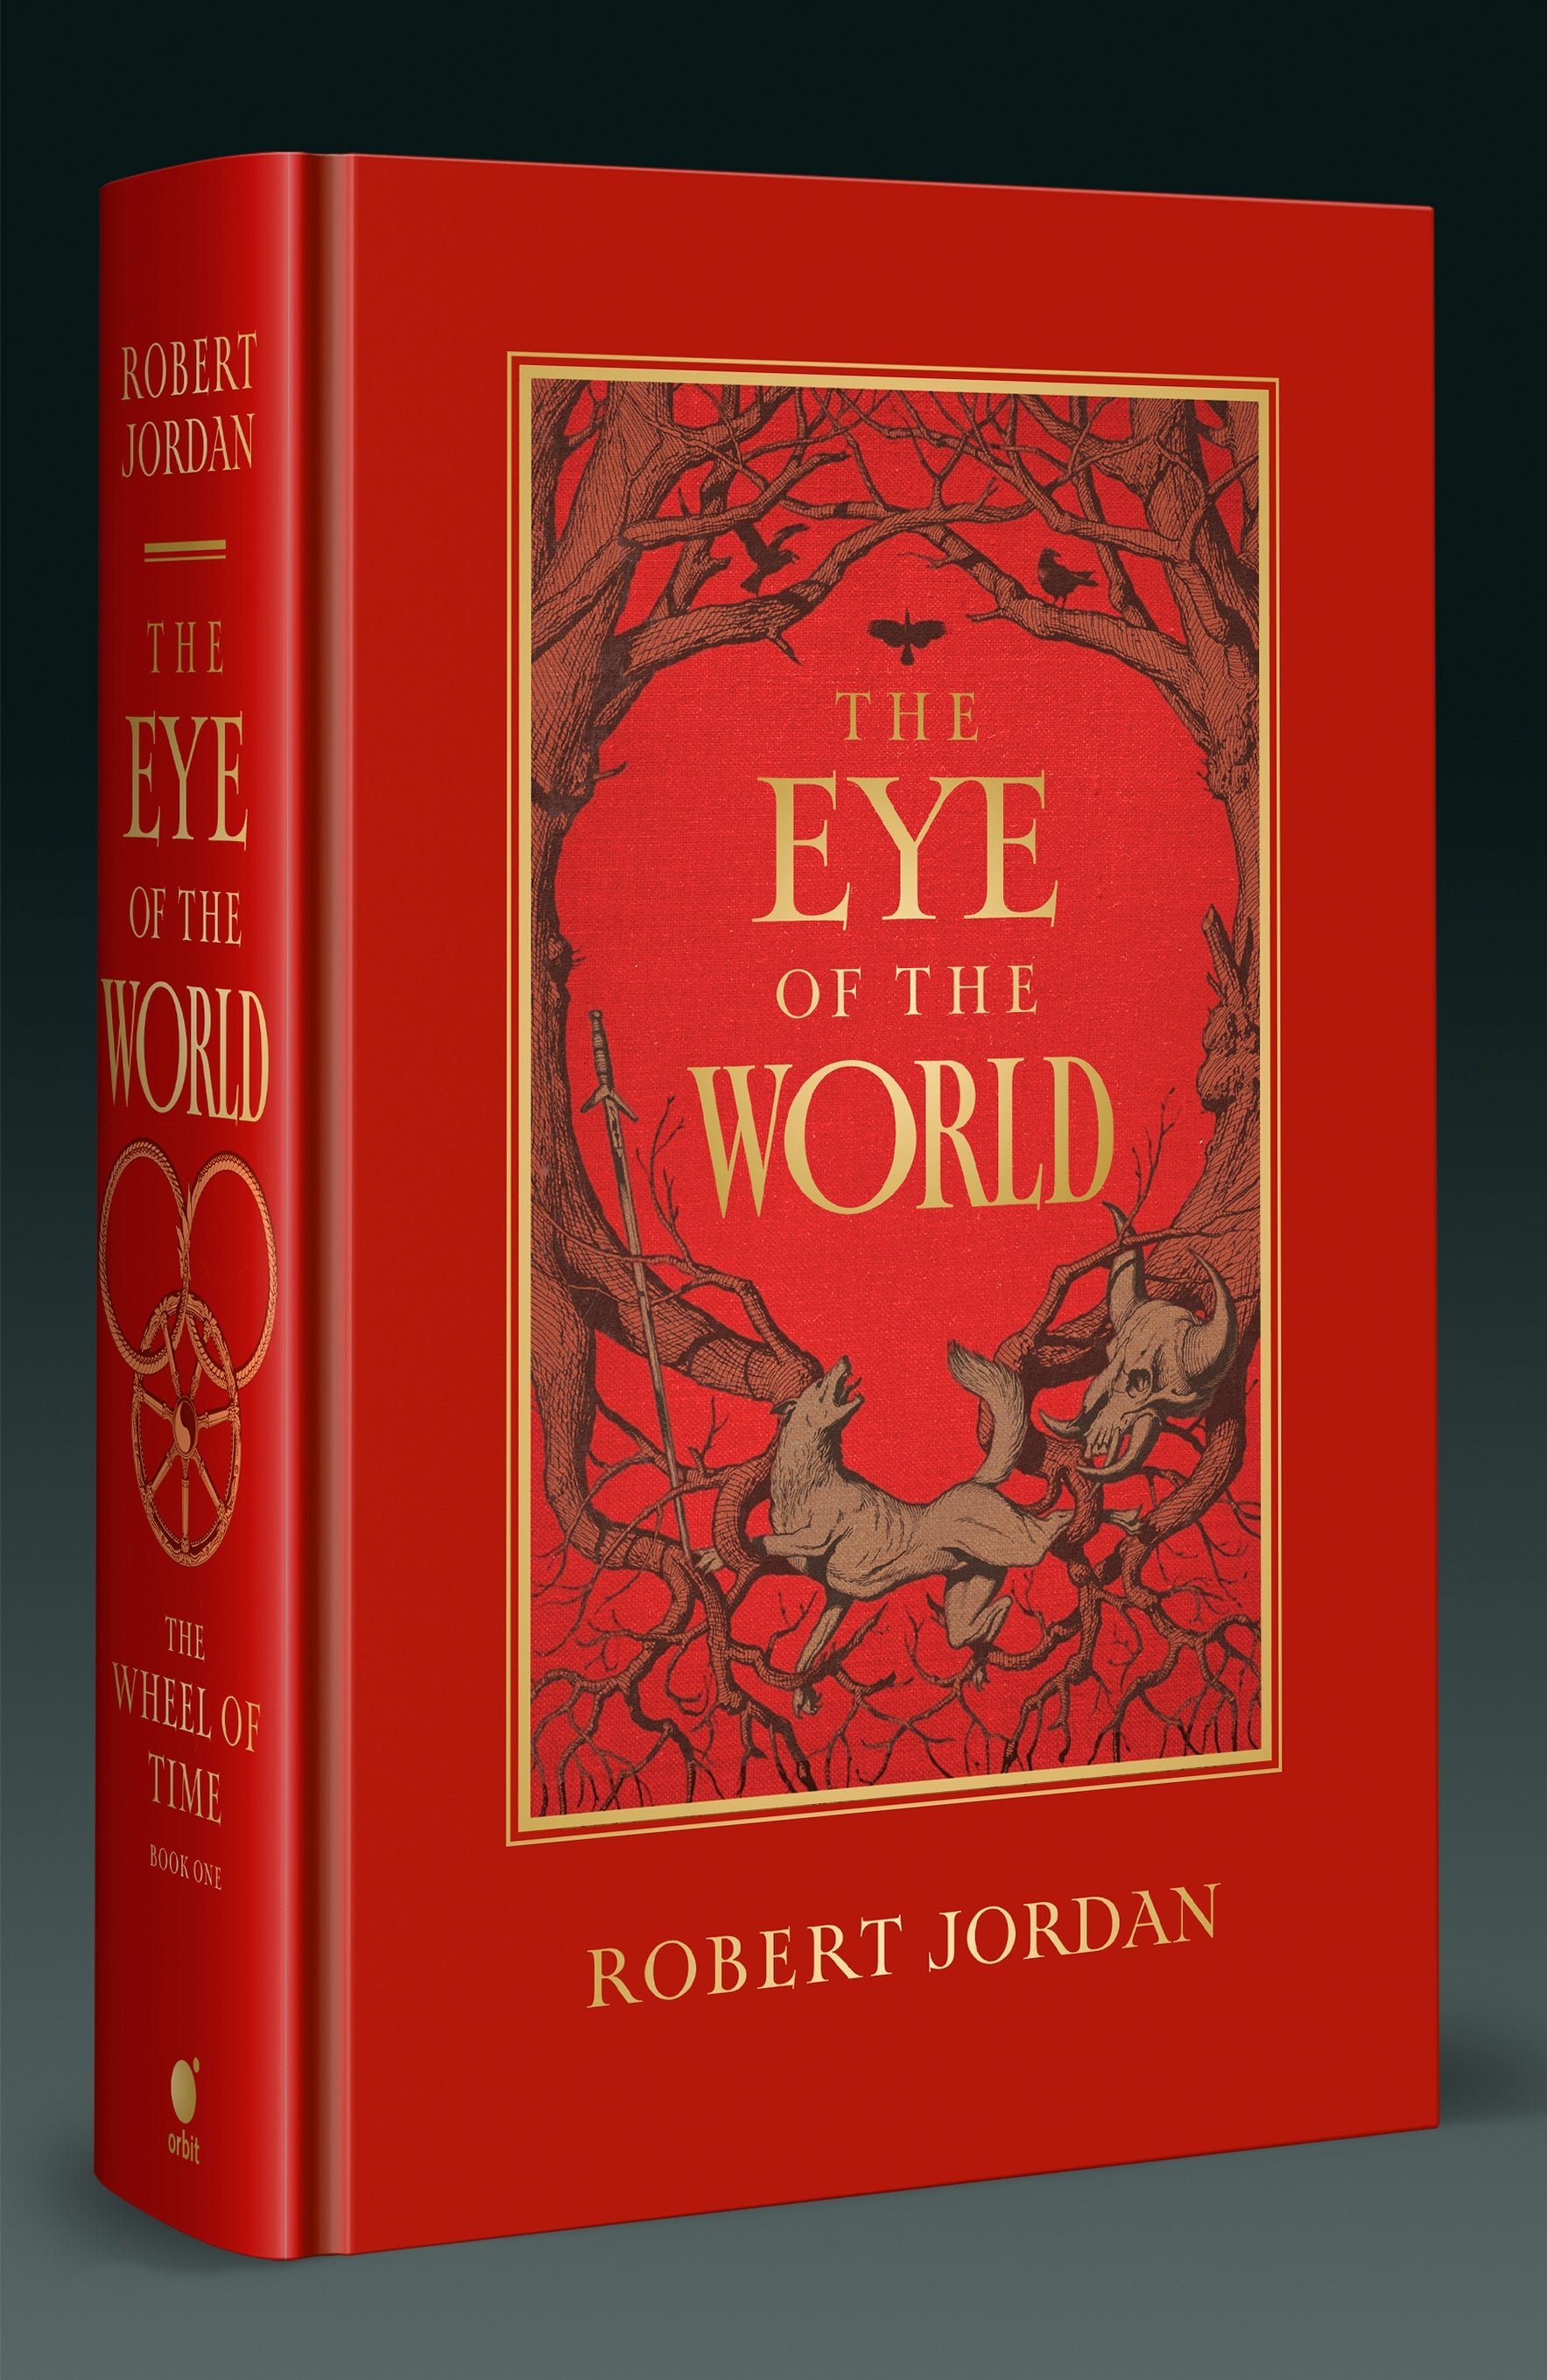 The Eye Of The World by Robert Jordan